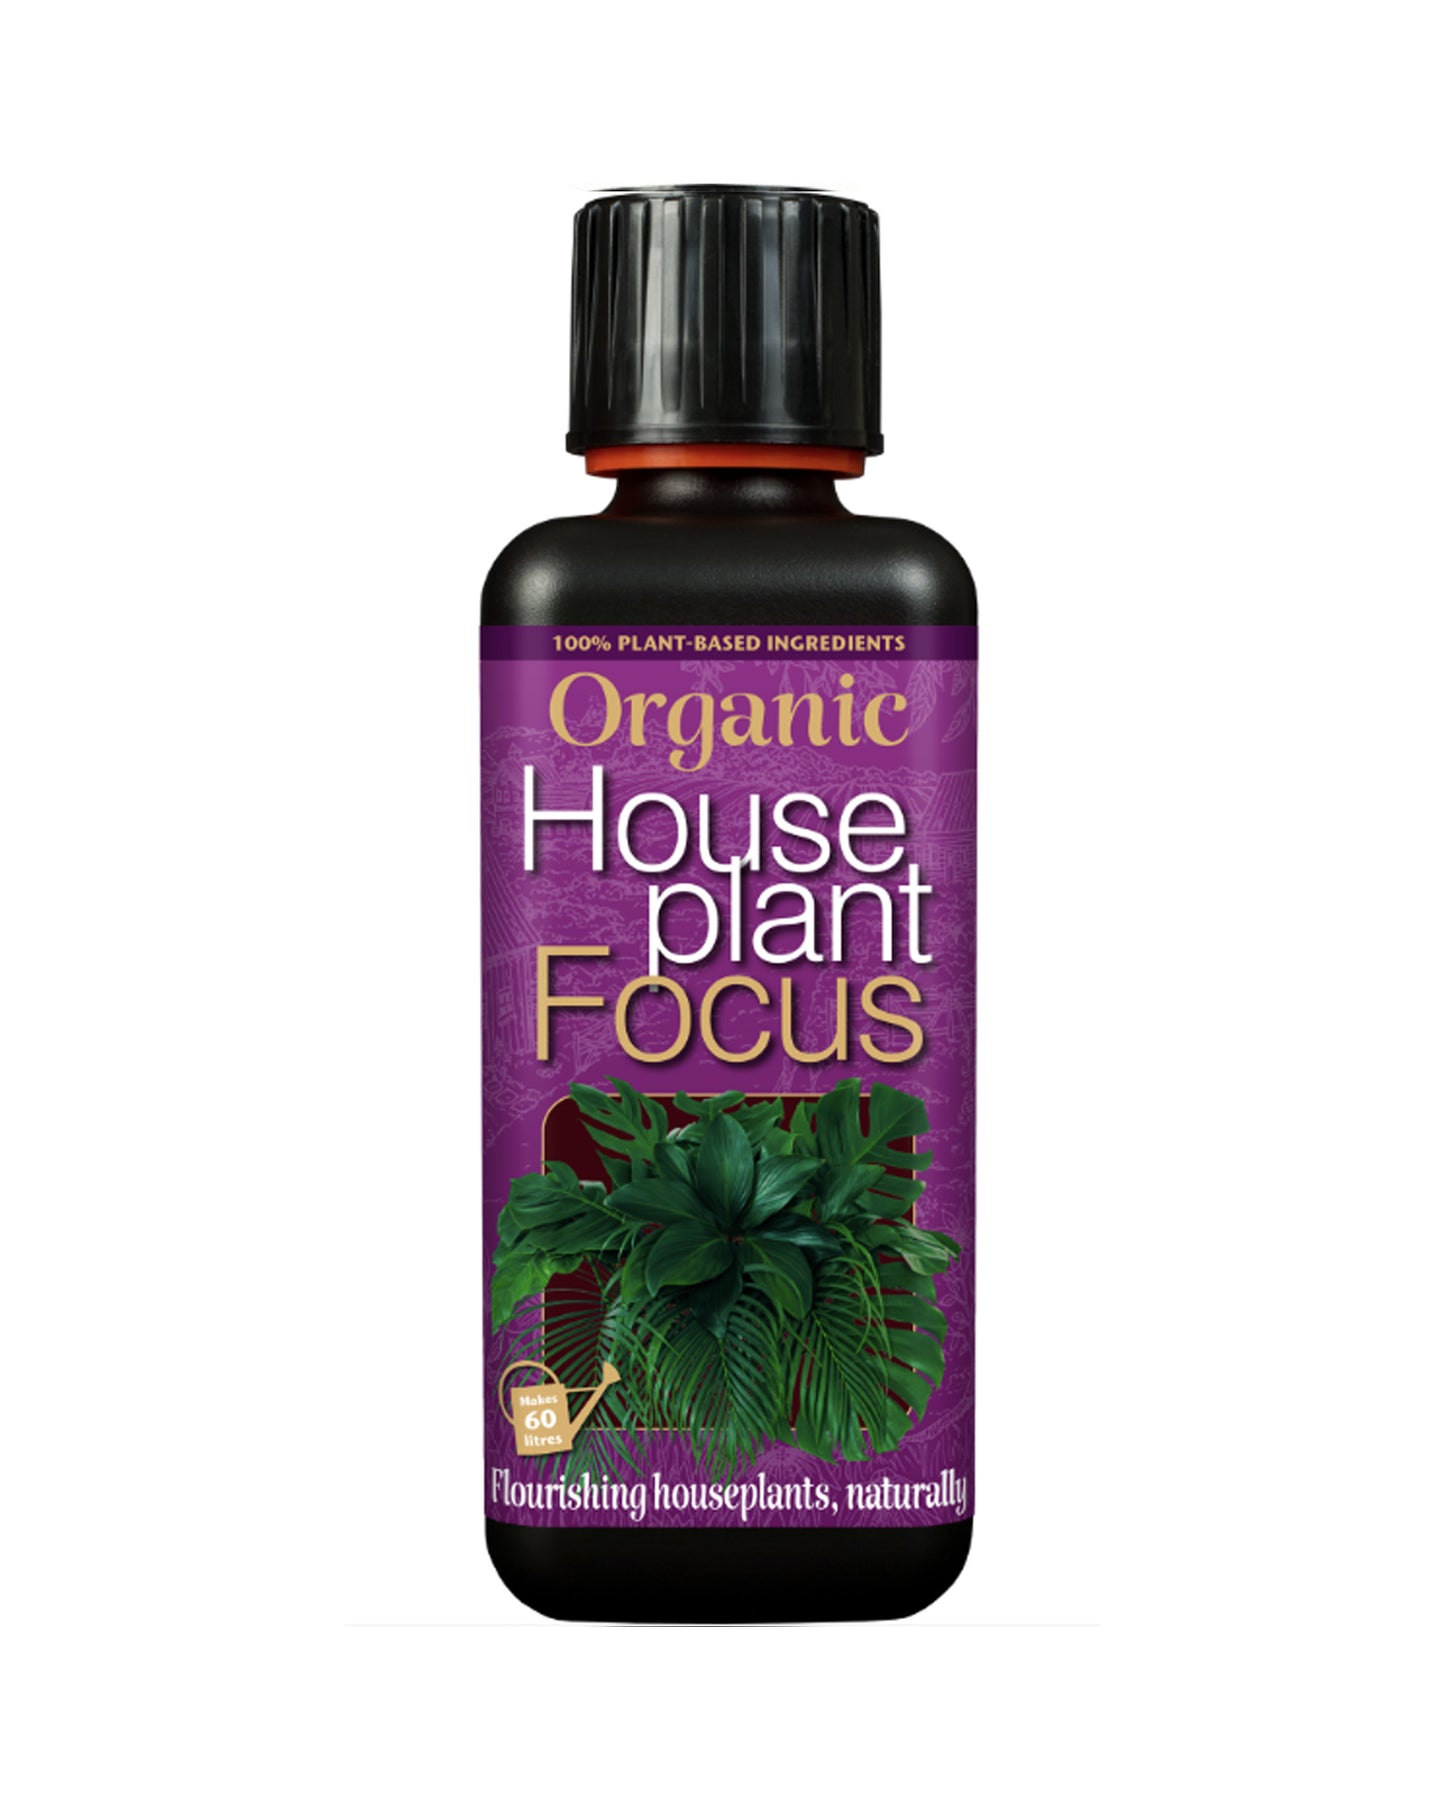 Organic House Plant Focus 300ml